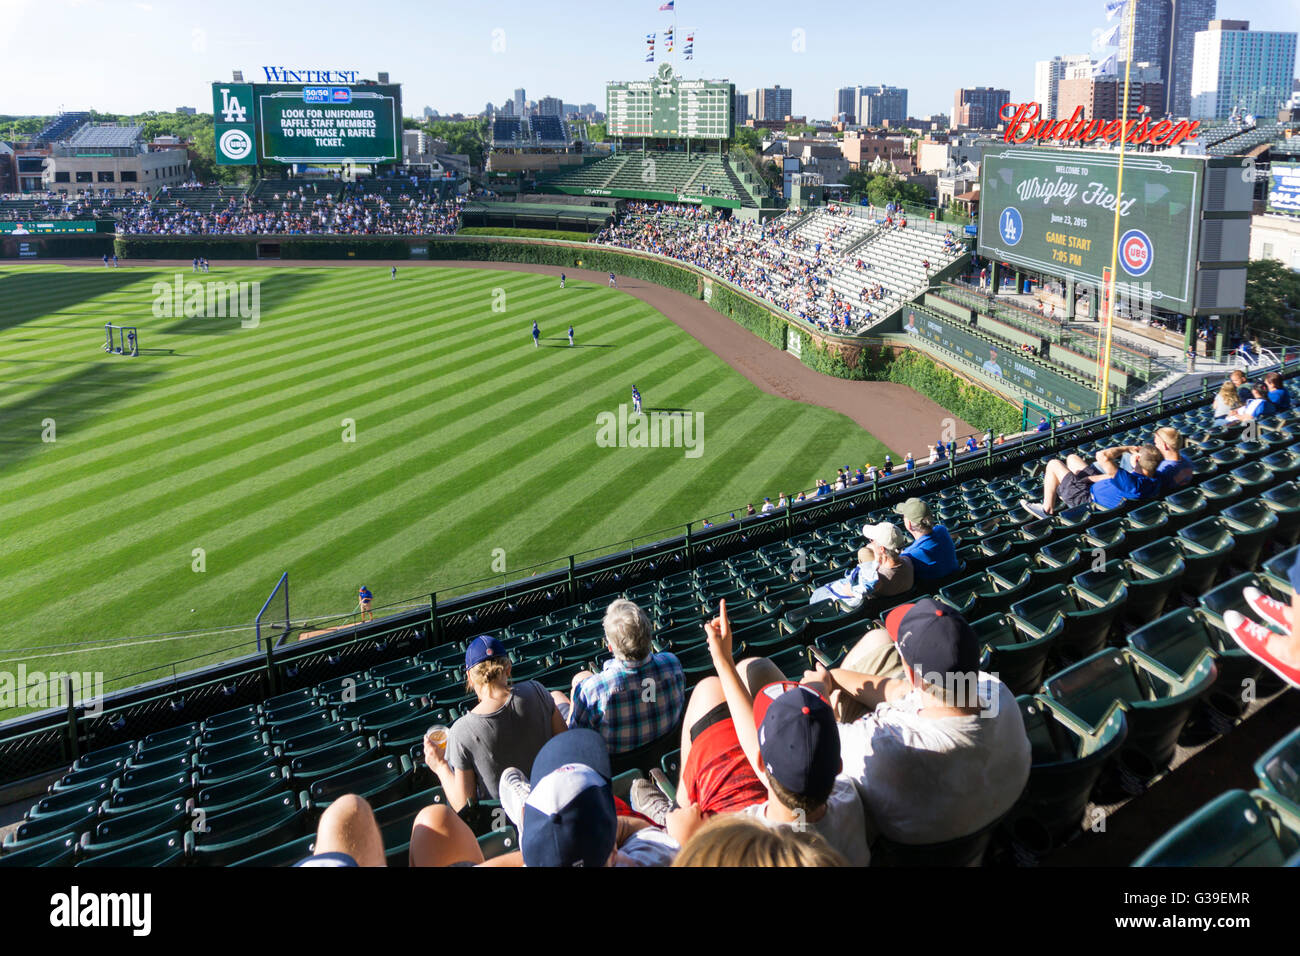 Terrain de baseball Wrigley Field de Chicago, le stade des Chicago Cubs. Banque D'Images